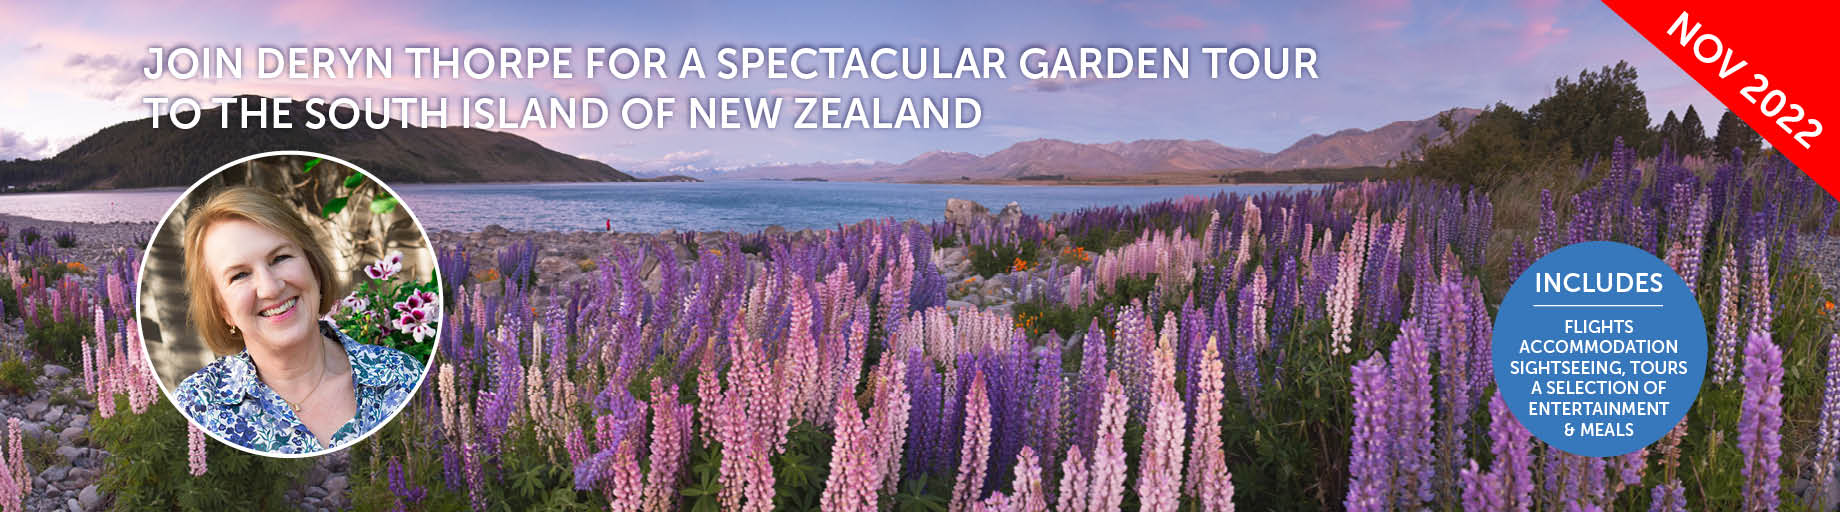 Garden Tour of New Zealand South Island